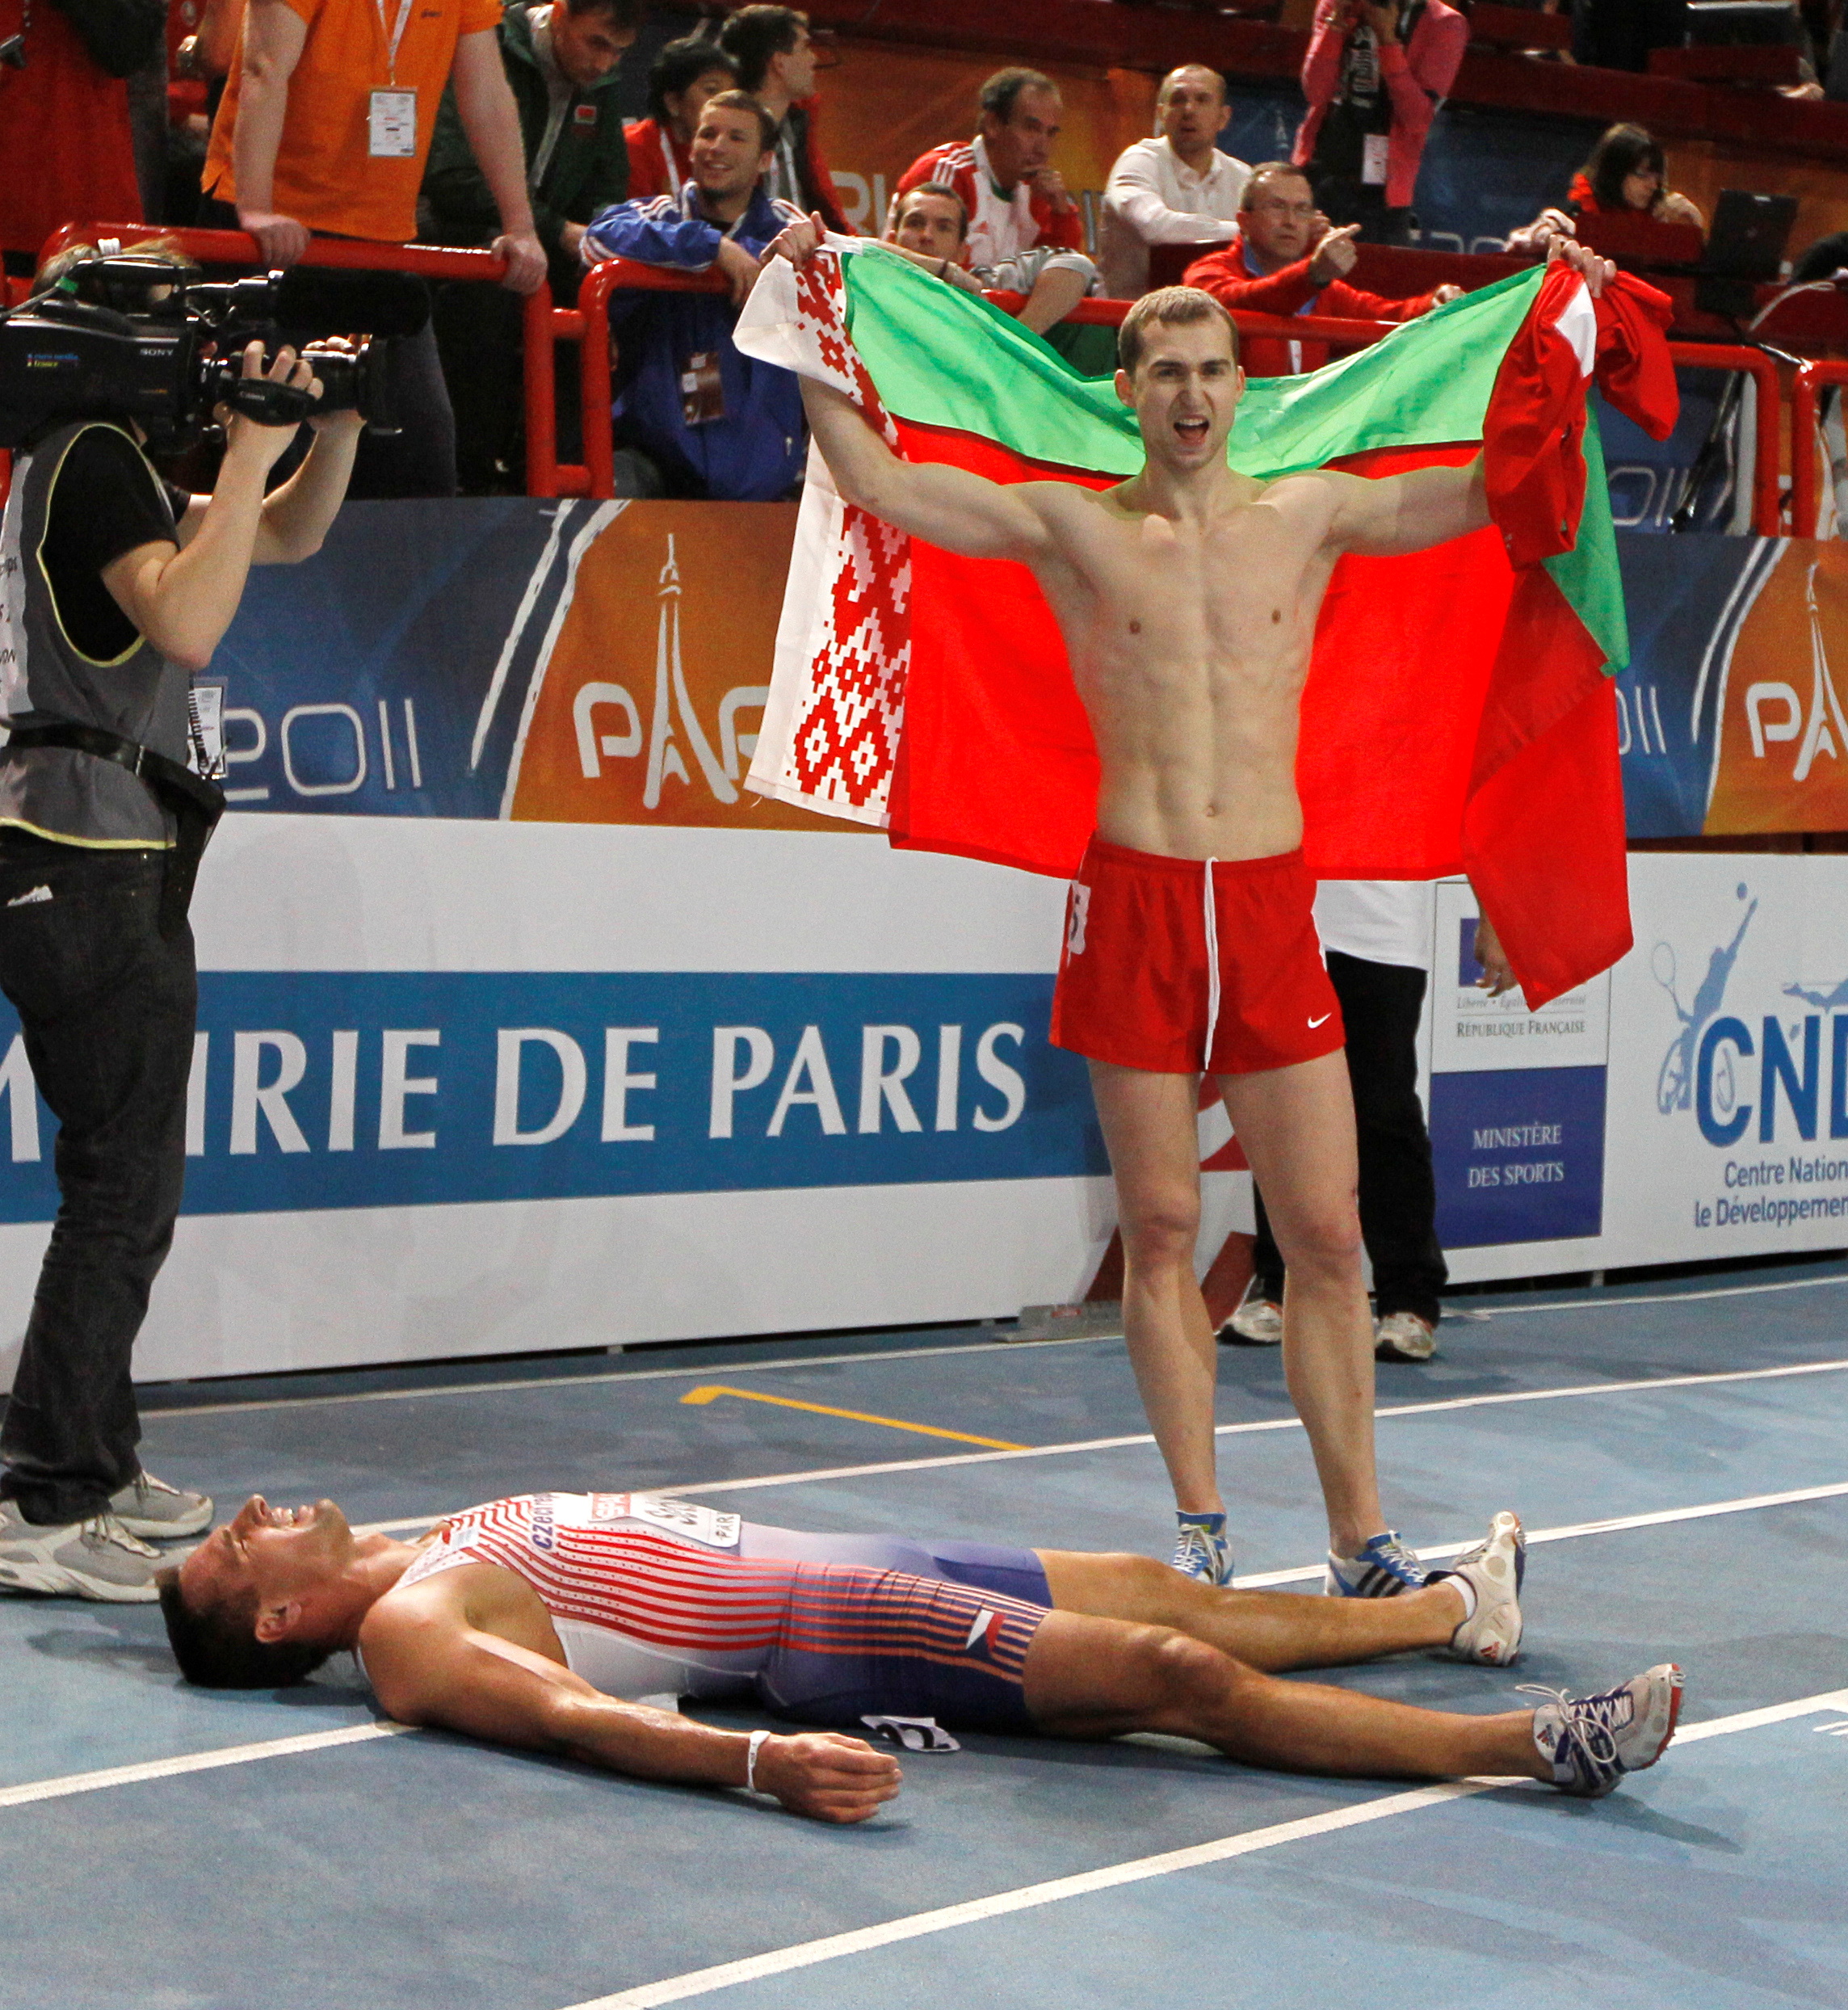 Belarus's Krauchanka and Czech Republic's Sebrle react after the men's Heptathlon event at the European Athletics indoor championships in Paris